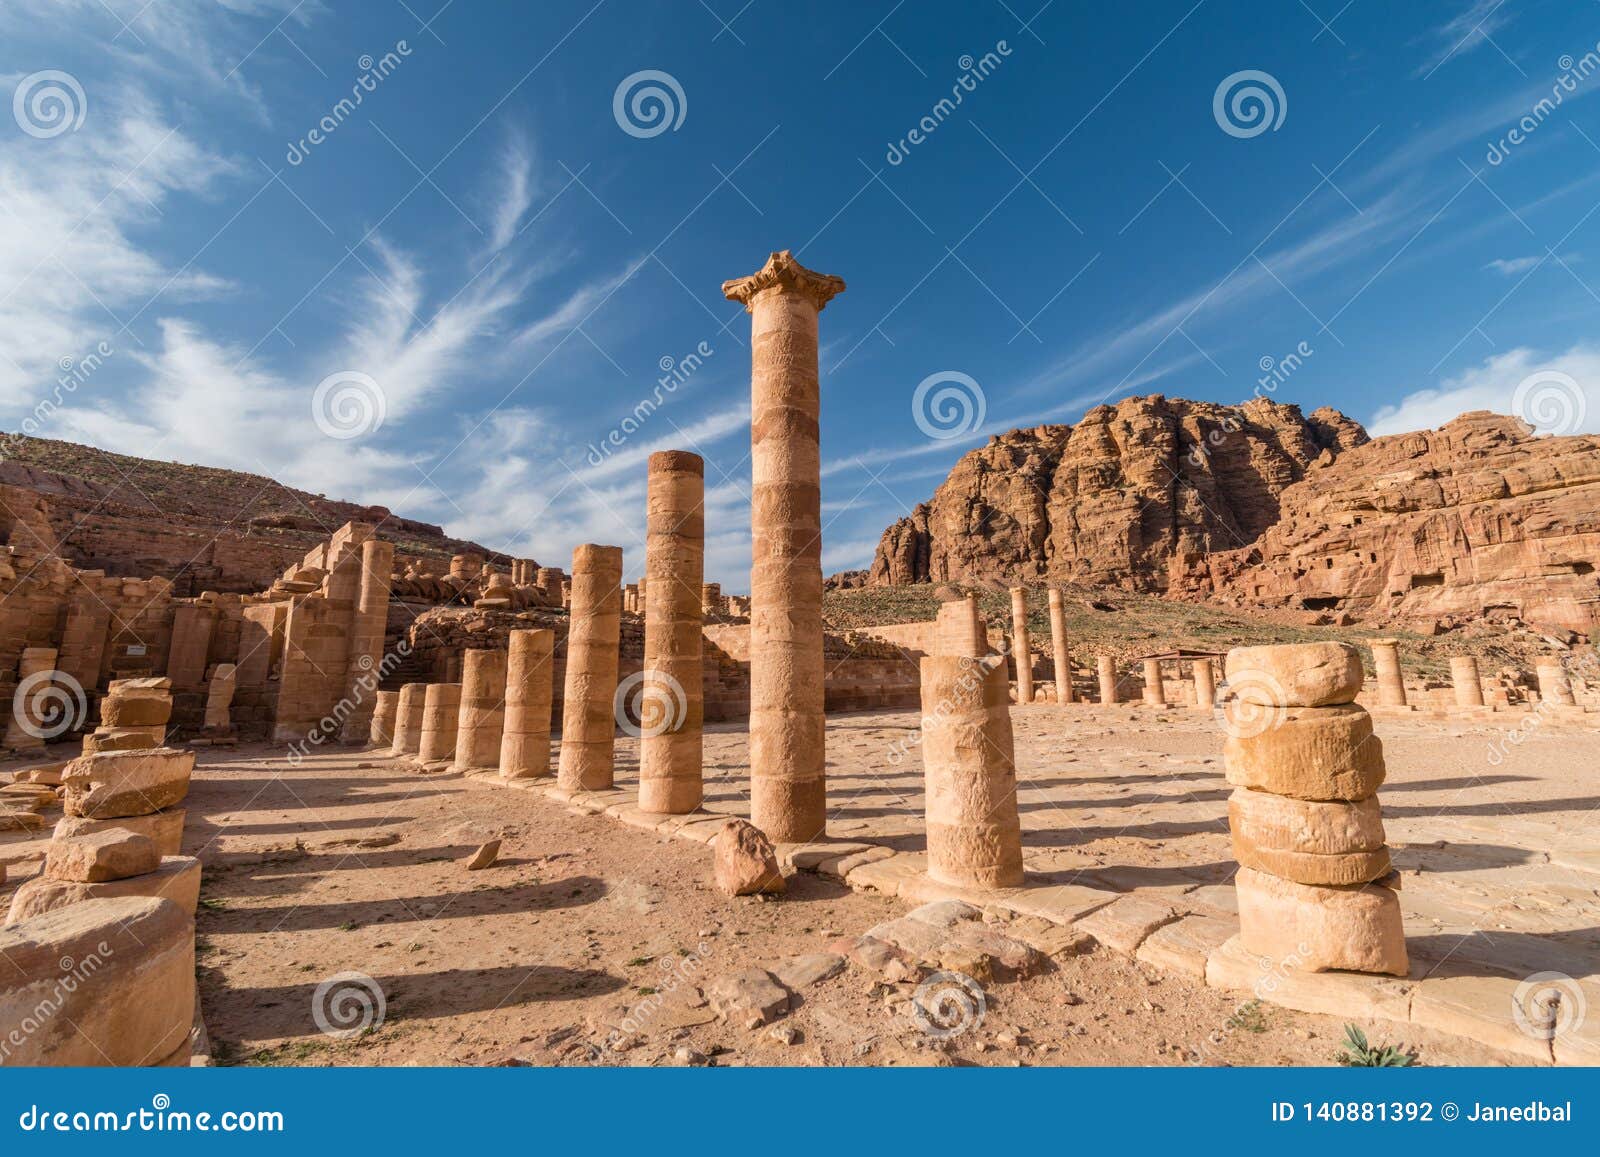 great temple columns in petra, wadi musa, jordan